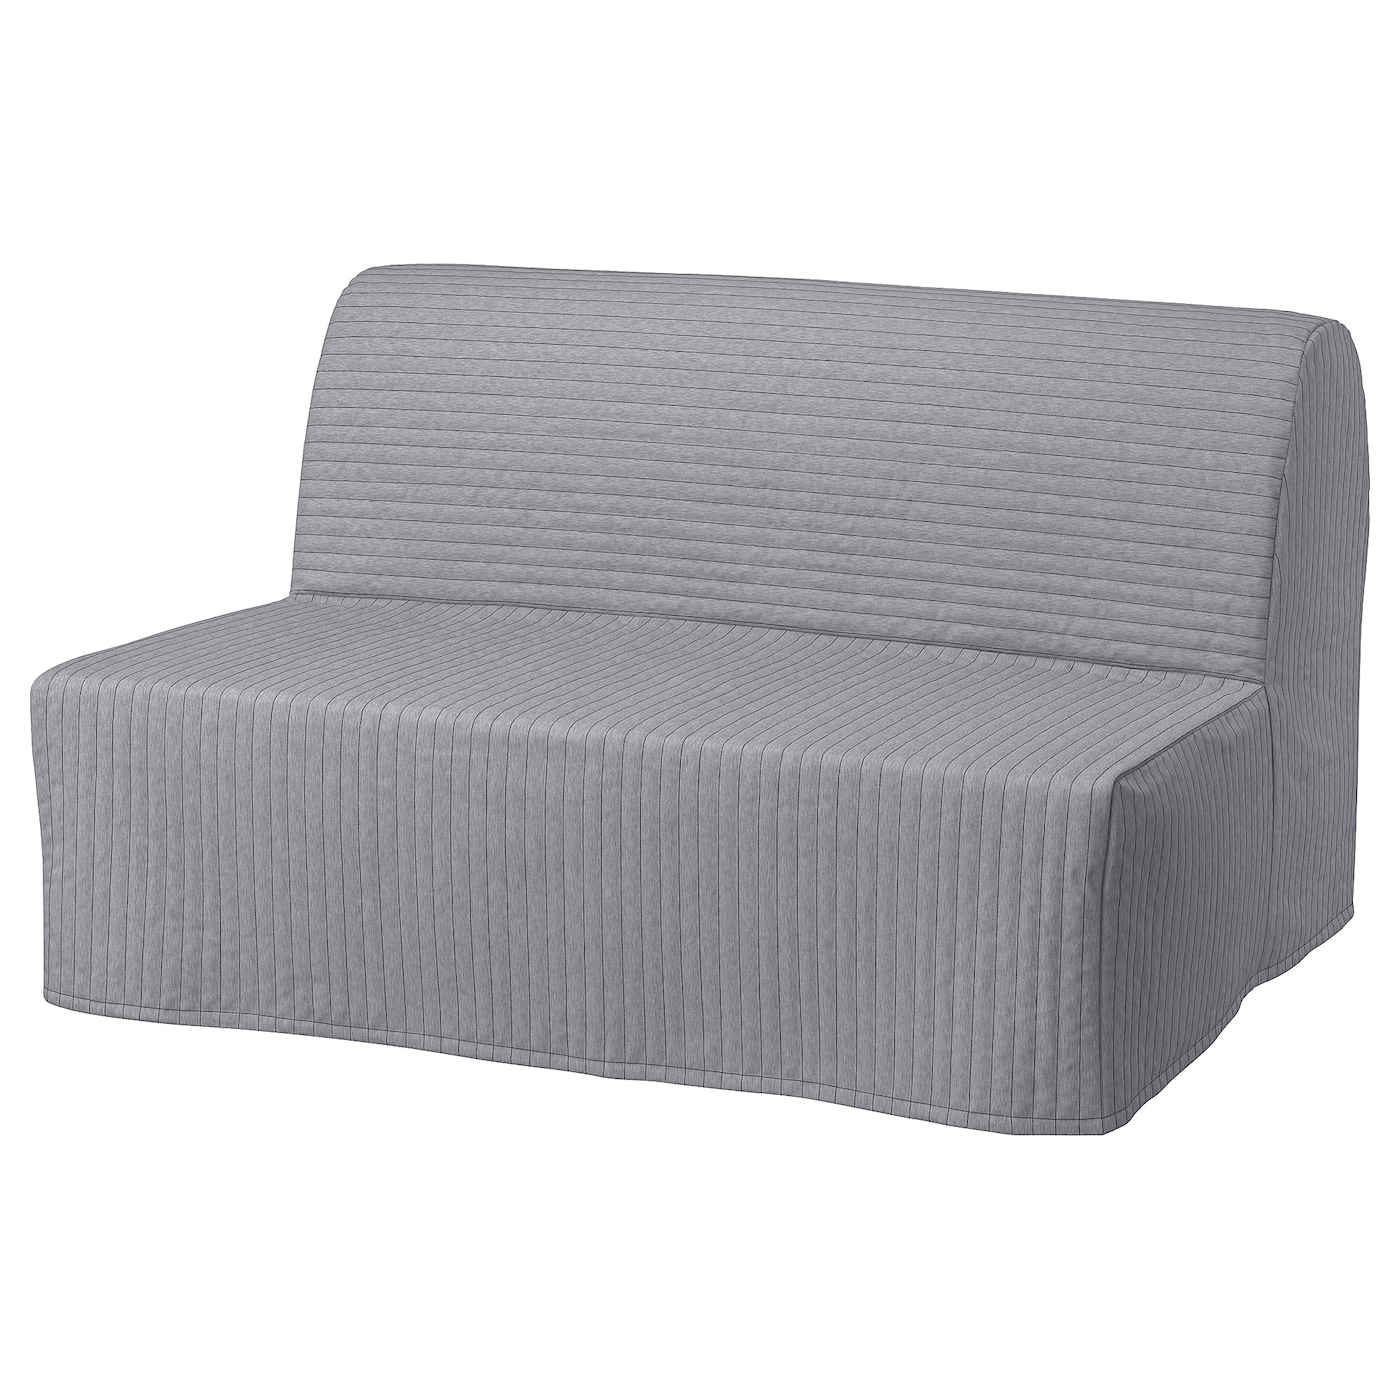 2-местный диван-кровать - IKEA LYCKSELE HÅVET/HAVET/ЛИКСЕЛЕ ХОВЕТ ИКЕА, 87х100х142 см, серый